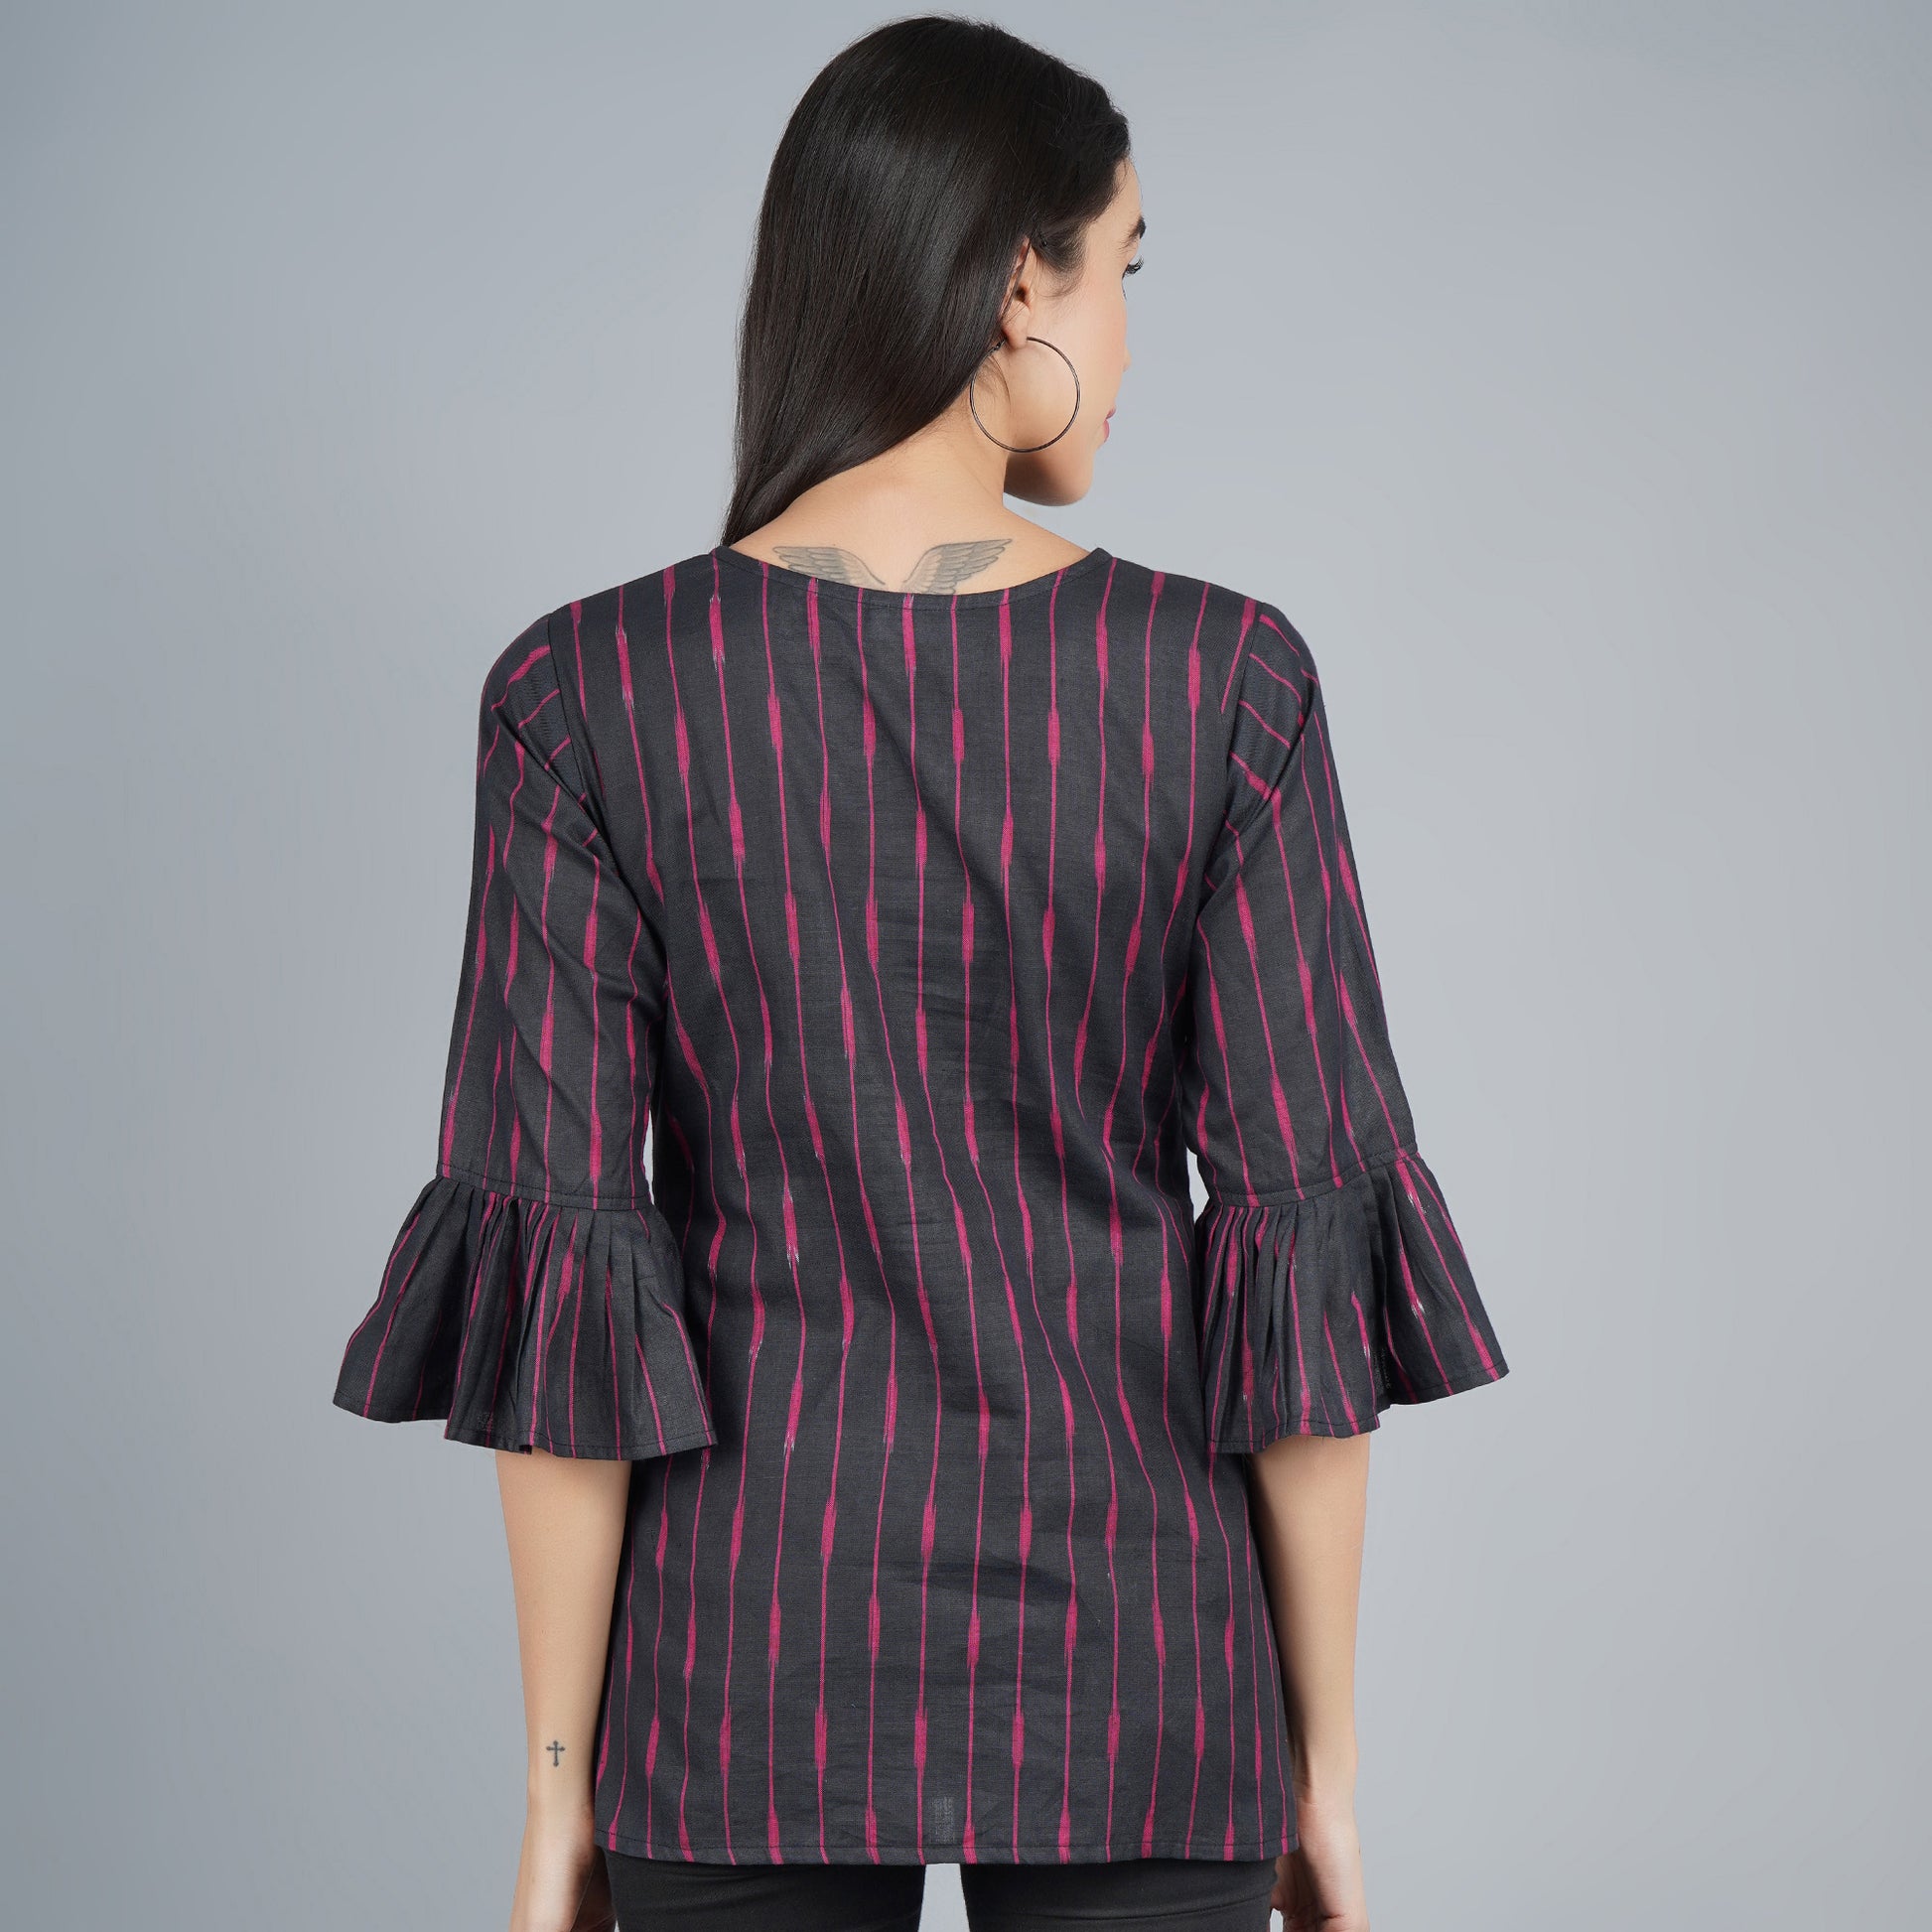 Black red stripe cotton top for women